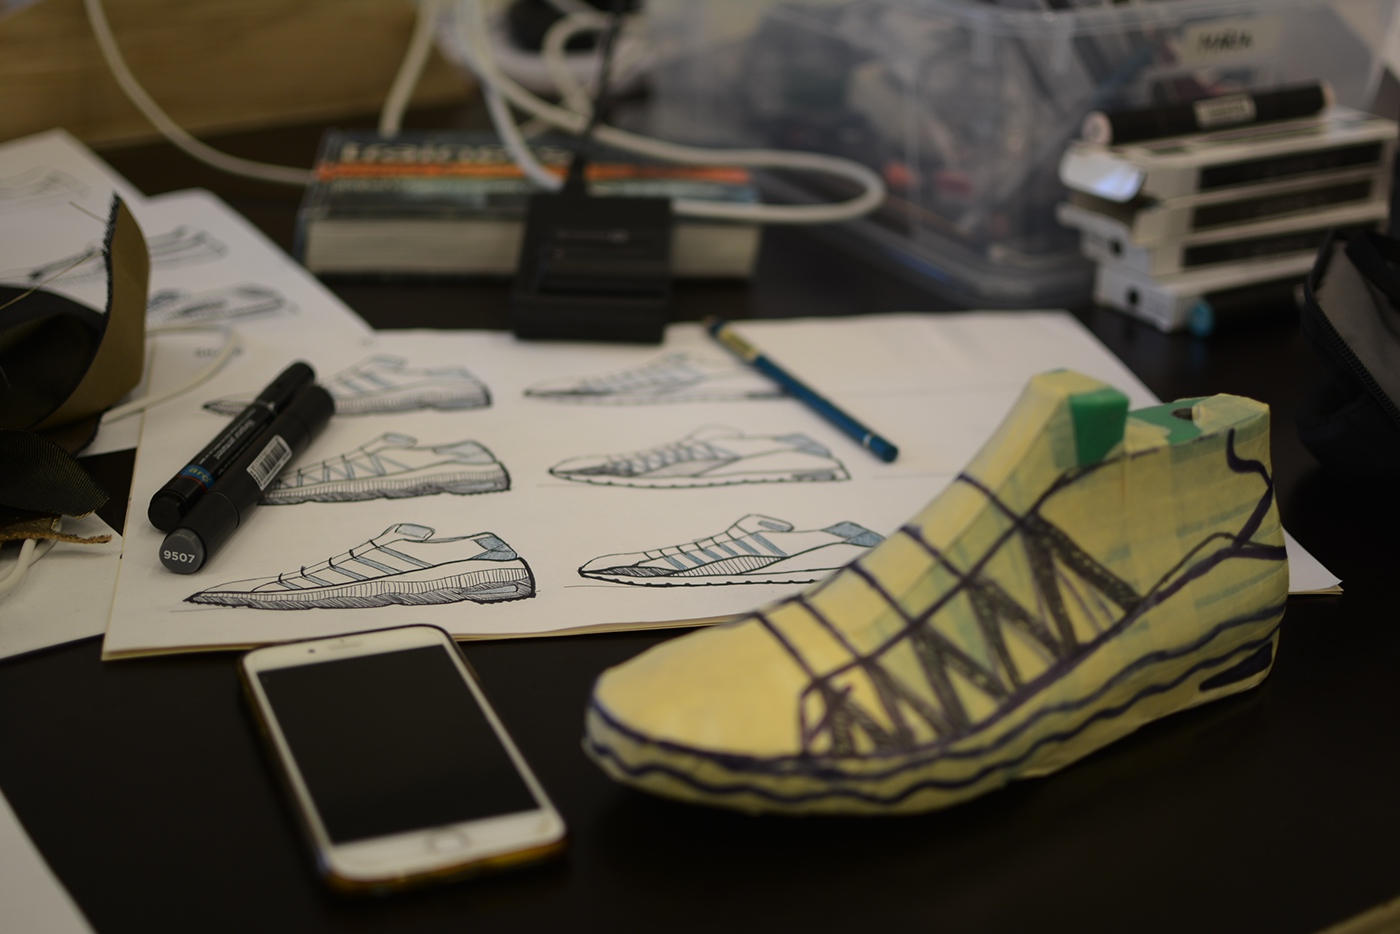 footwear footweardesign shoes DesignProcess tech Wearable last teaching course designmethods